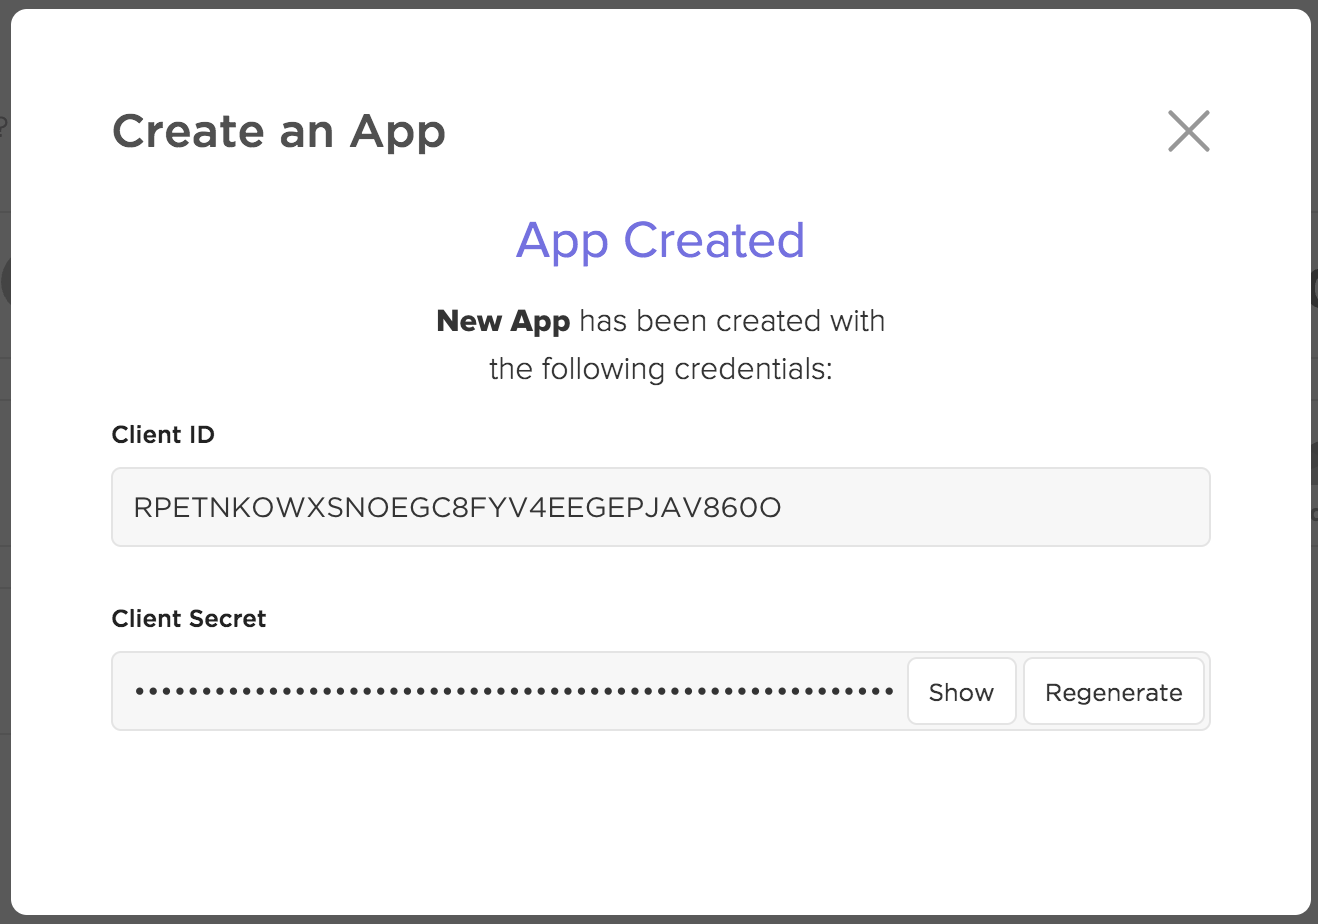 Screenshot of the app' modal using OAuth2.